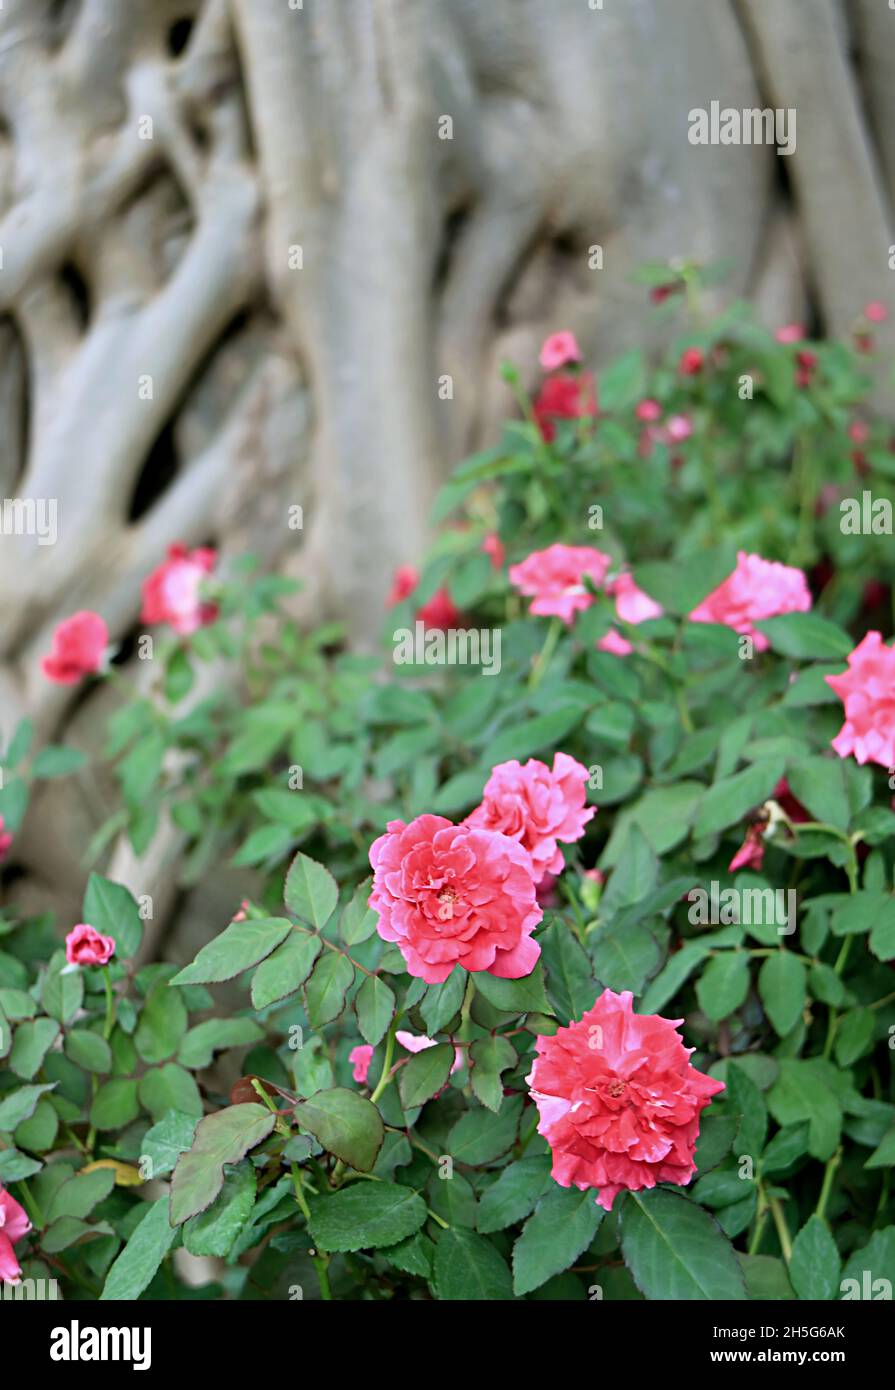 Shrub of Rosa Damascena or Kazanlak Rose with Blurry Big Tree in the Backdrop Stock Photo